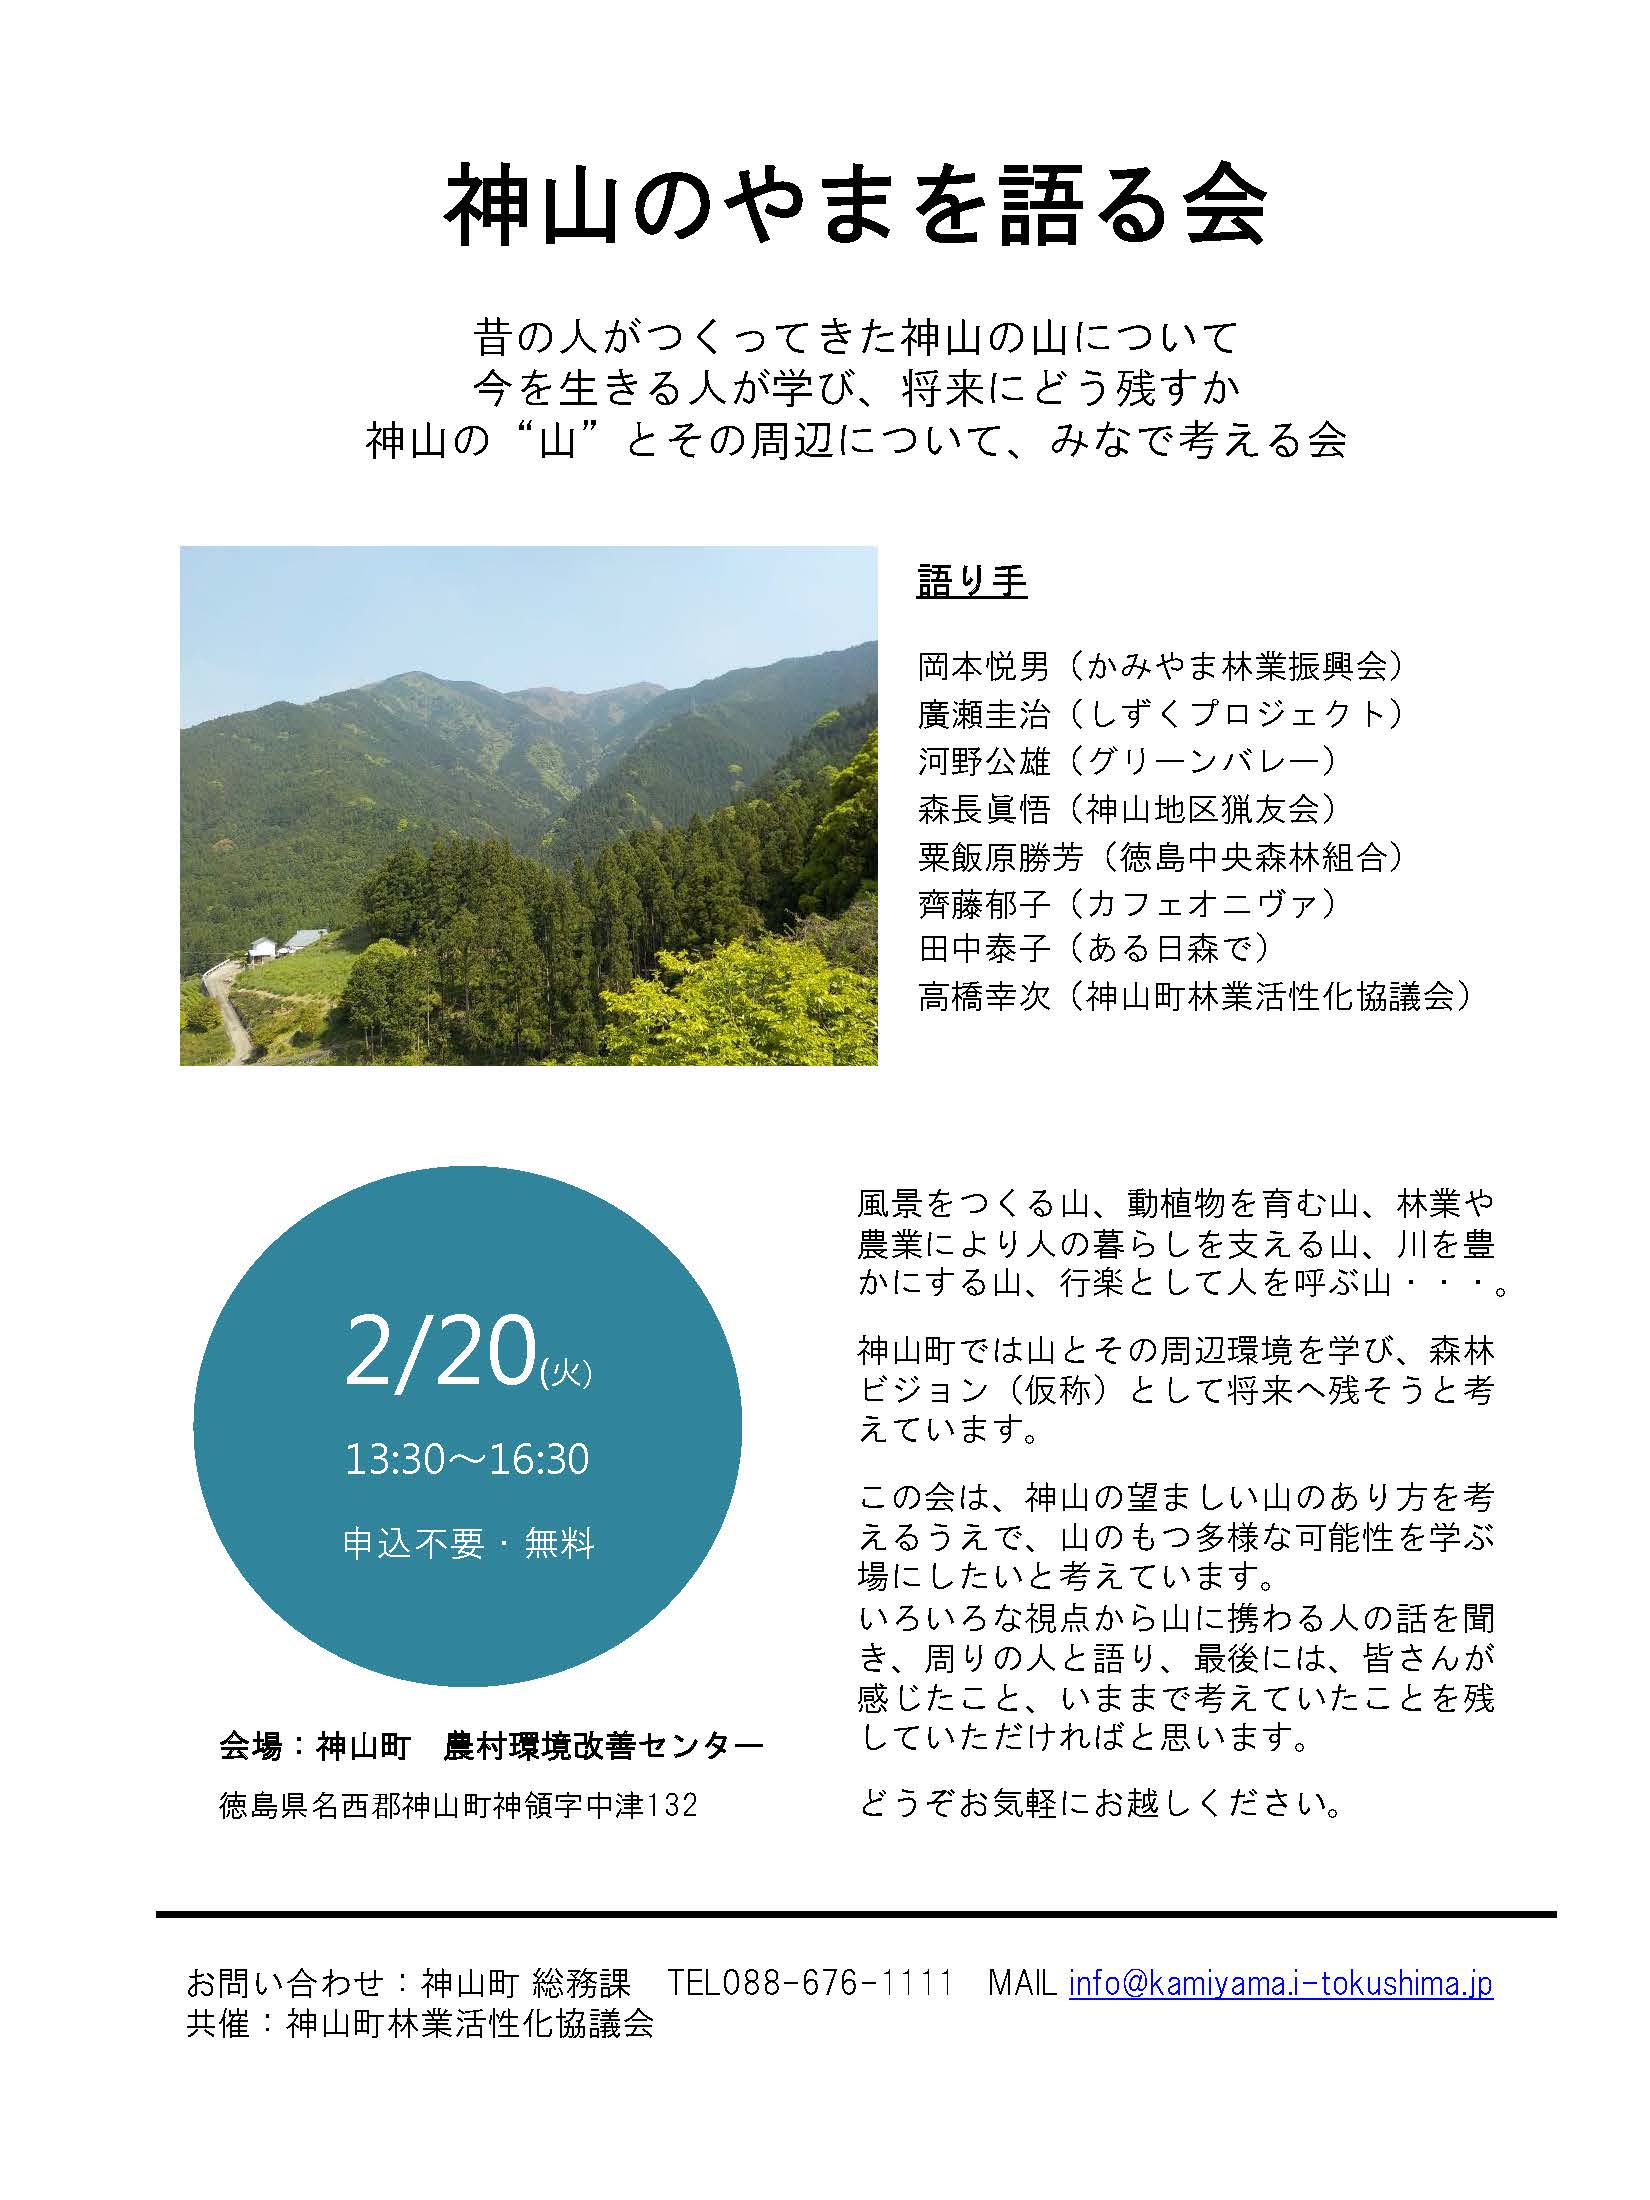 http://www.town.kamiyama.lg.jp/office/soumu/image/20180205%E7%A5%9E%E5%B1%B1%E3%81%AE%E5%B1%B1%E3%82%92%E8%AA%9E%E3%82%8B%E4%BC%9A.jpg